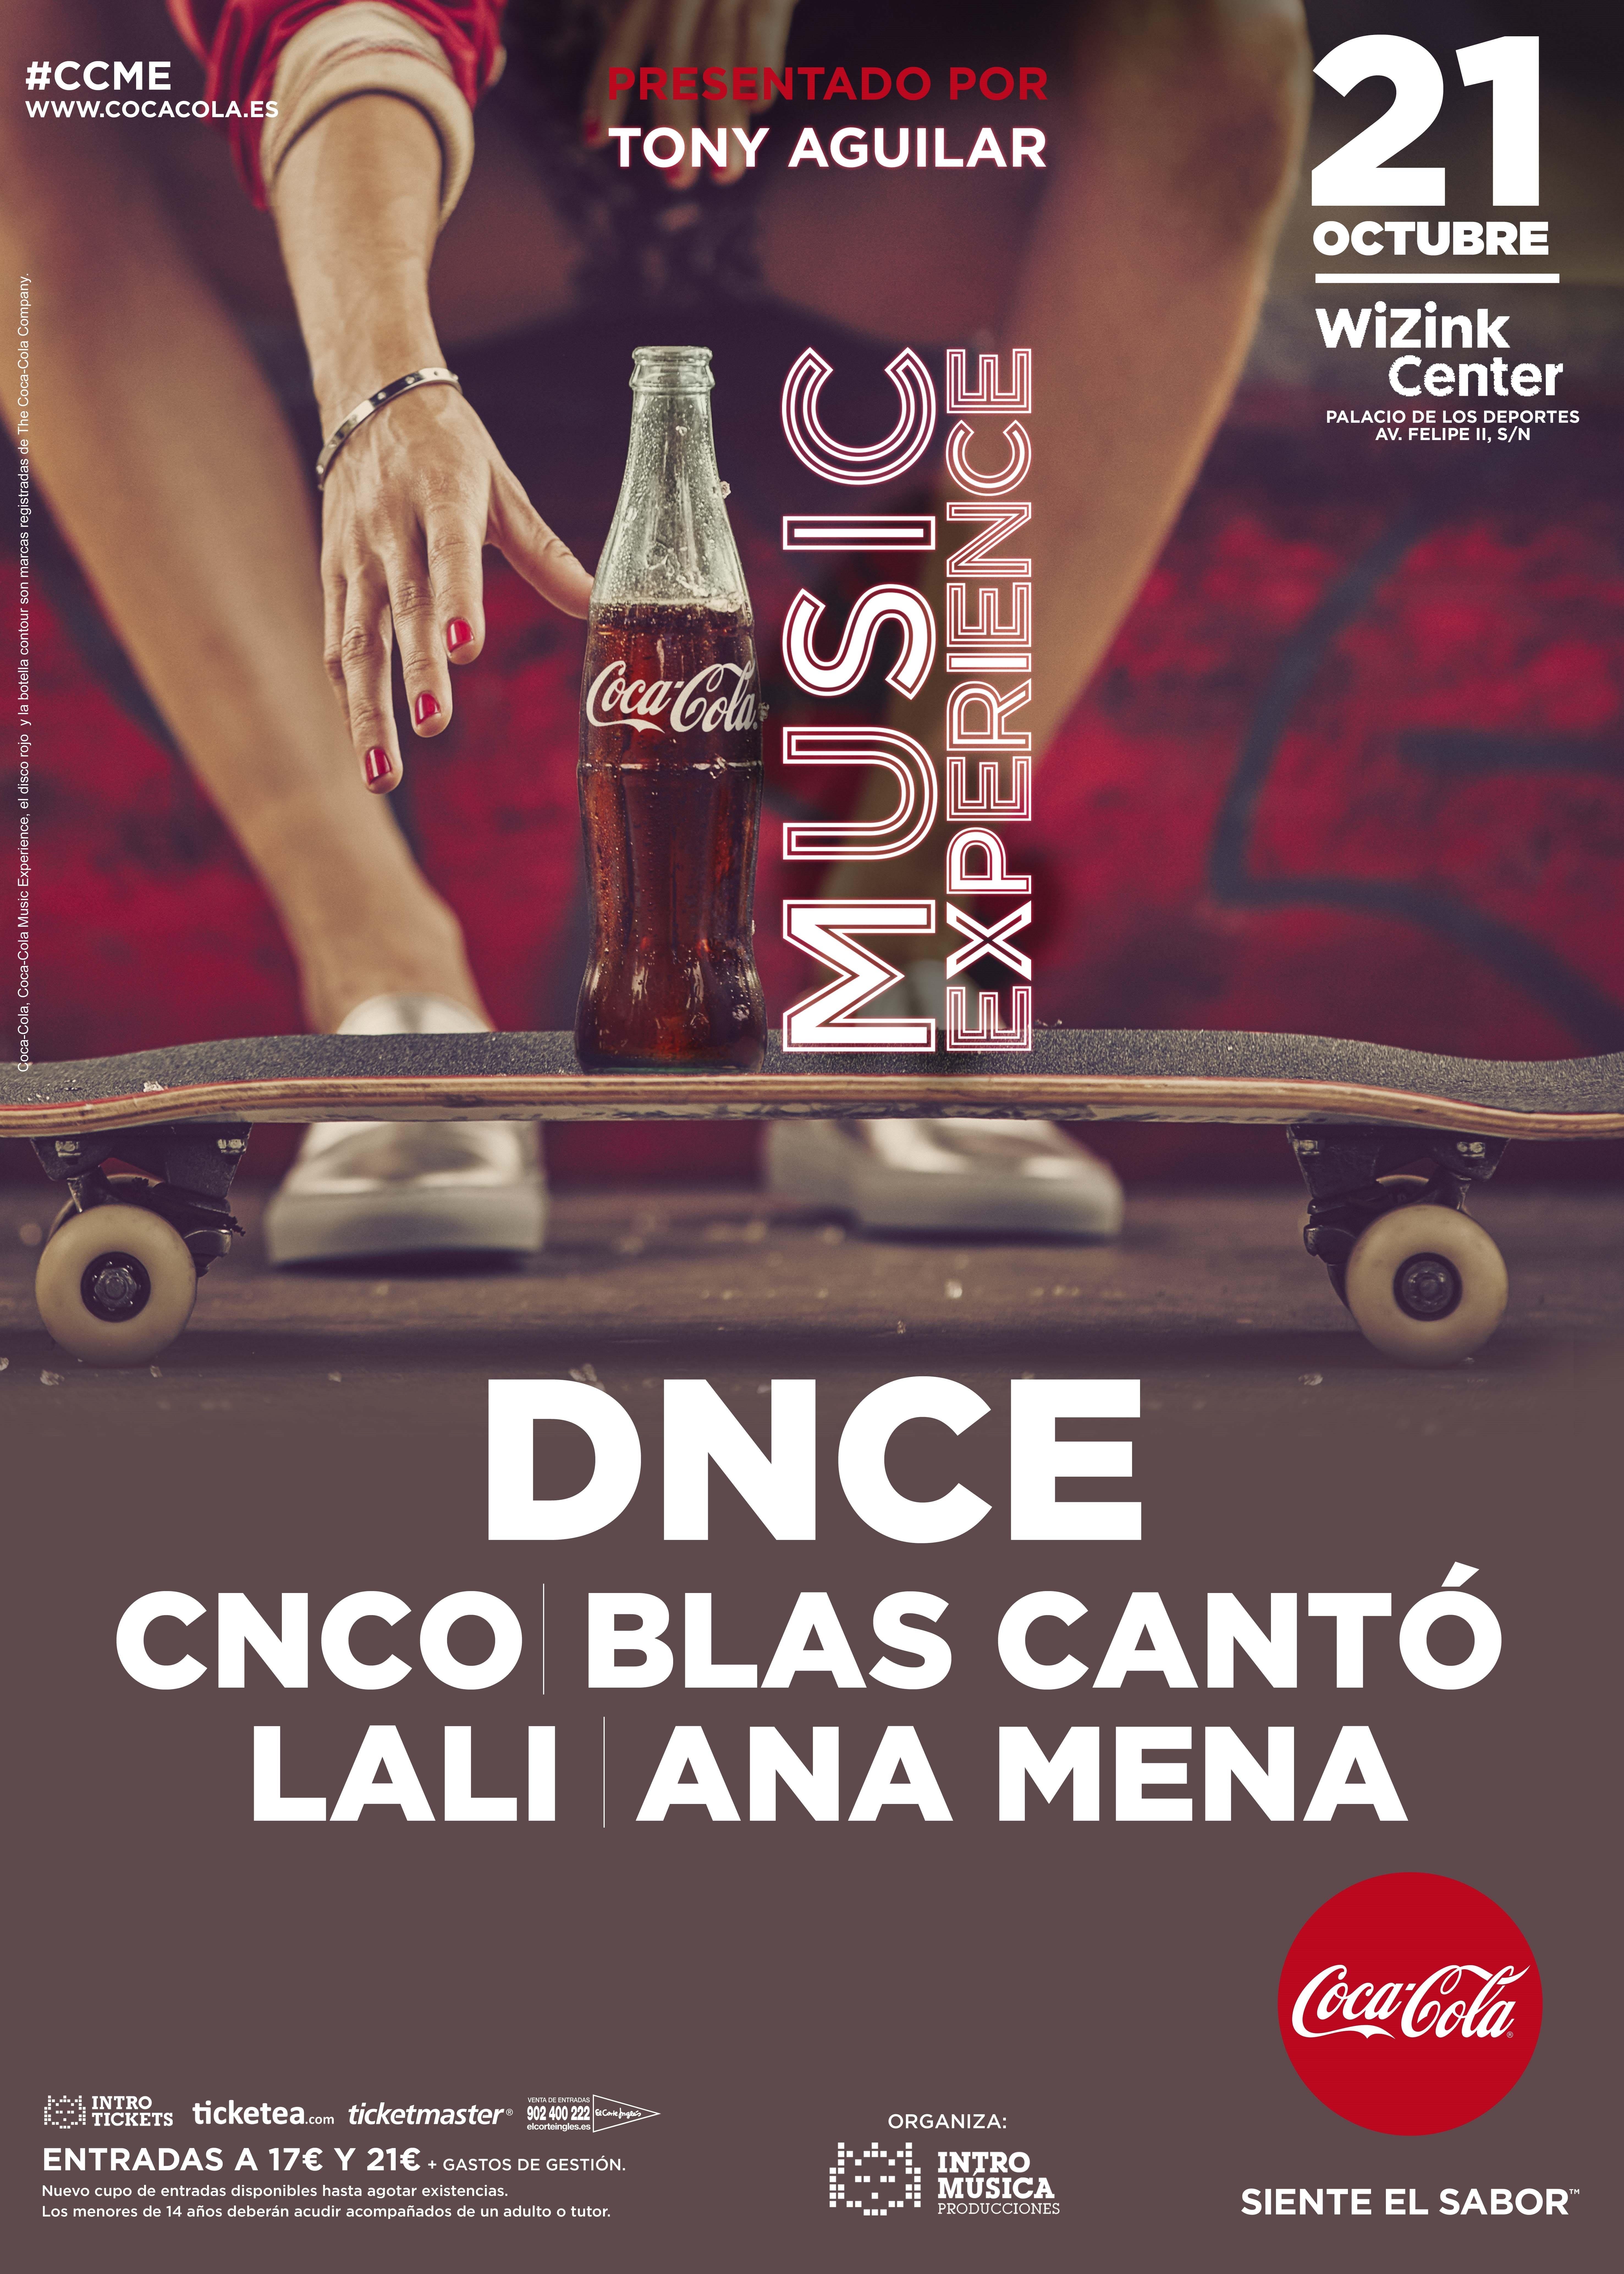 DNCE, con Joe Jonas al frente, cabeza de cartel de CocaCola Music